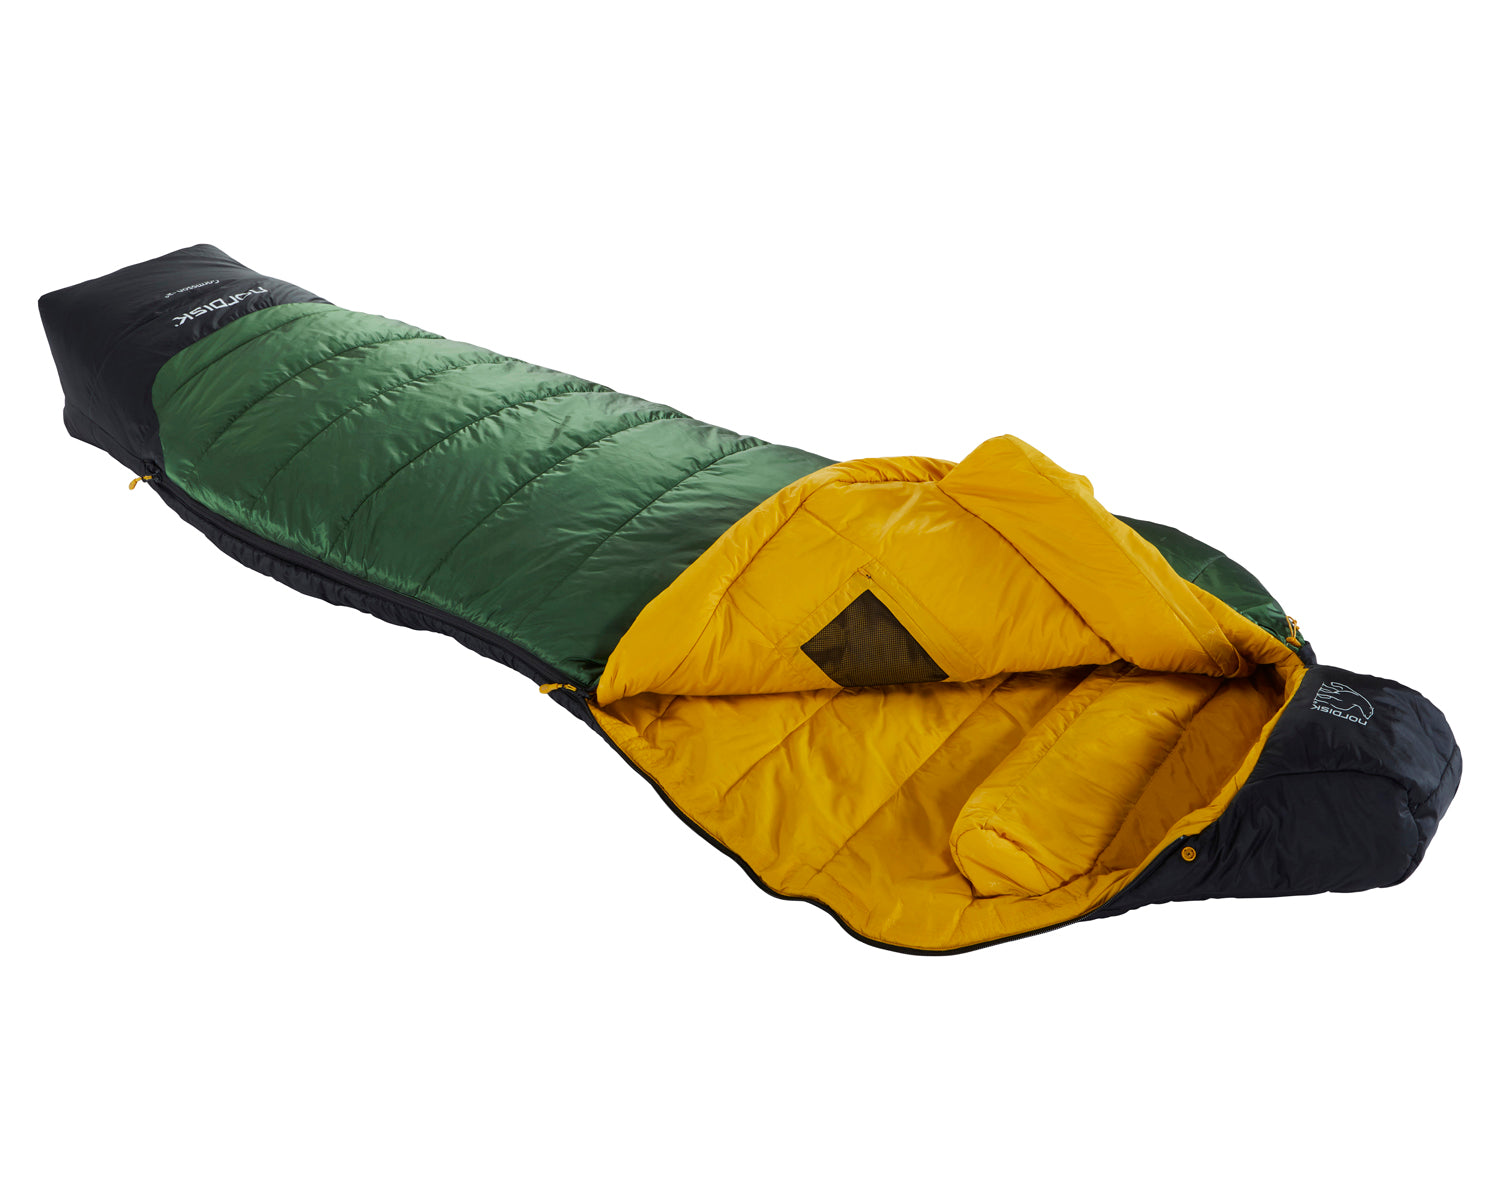 Gormsson -2° Curve sleeping bag - Artichoke Green/Mustard Yellow/Black